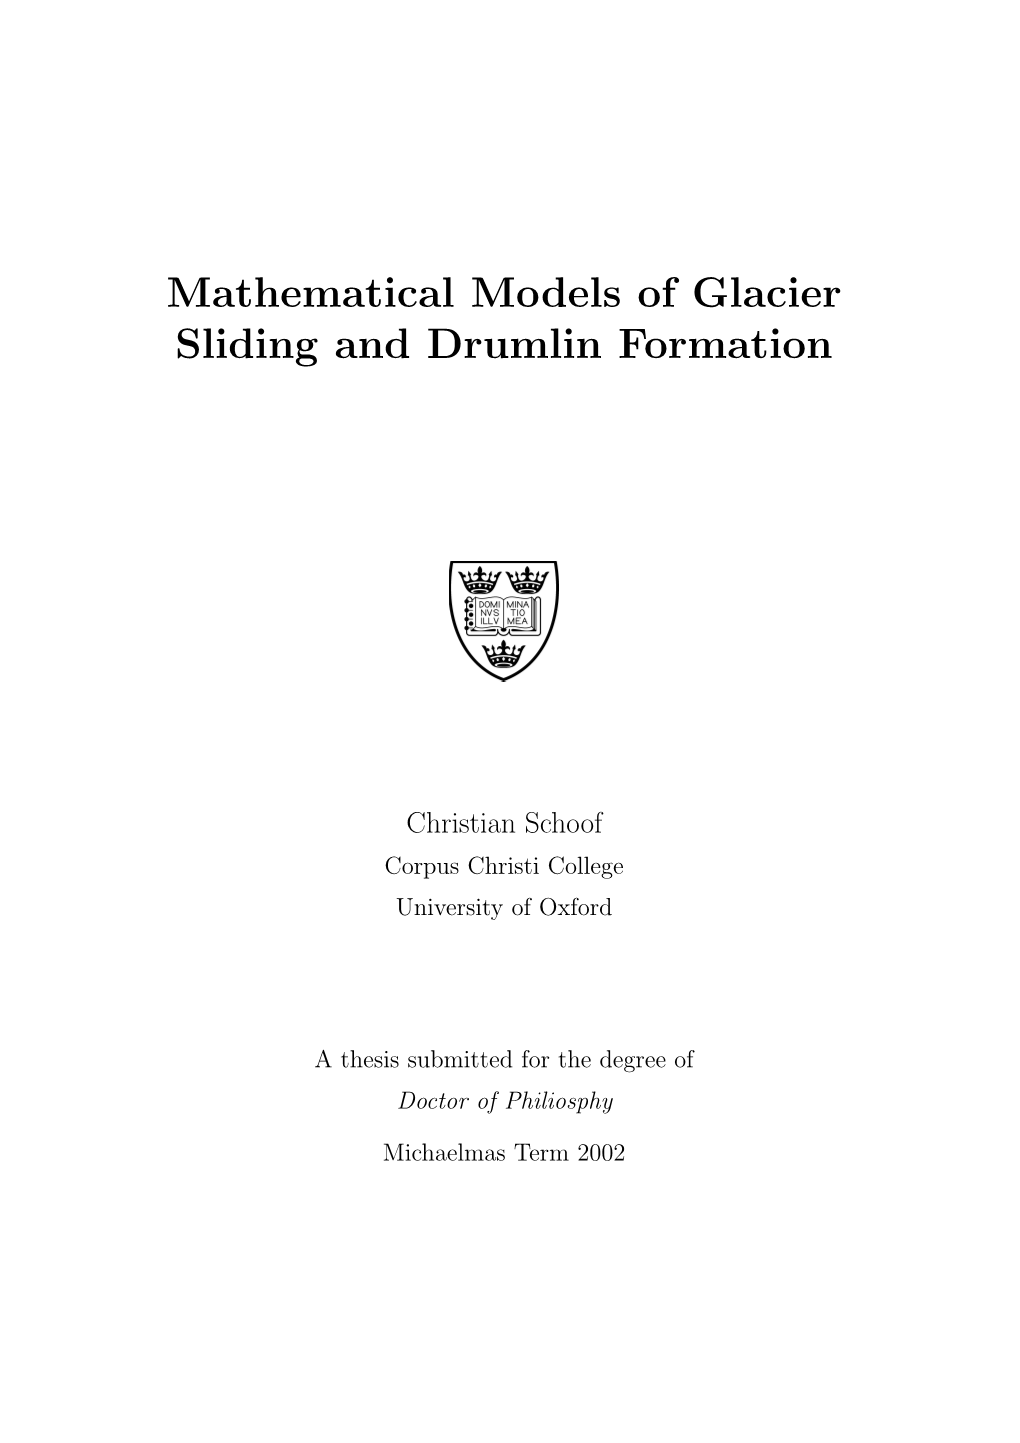 Mathematical Models of Glacier Sliding and Drumlin Formation